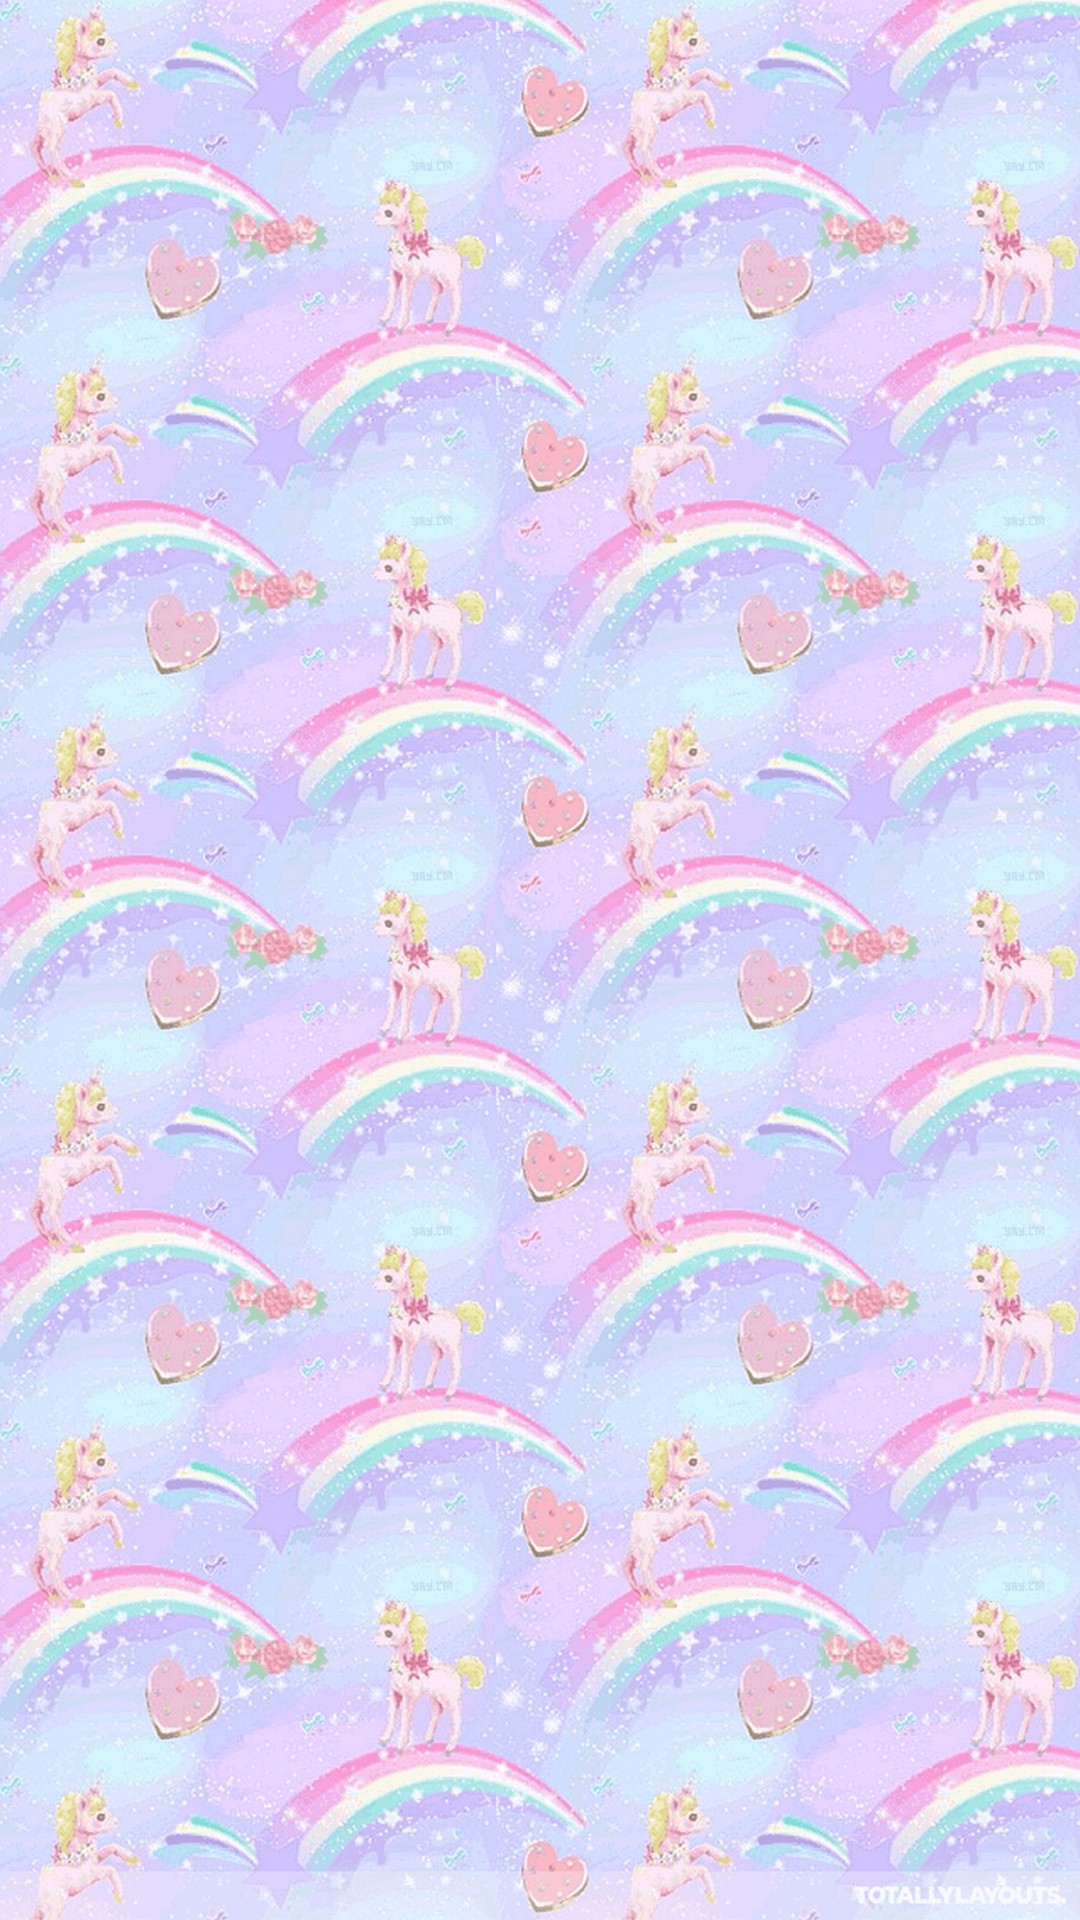 Cute Girly Unicorn Iphone Home Screen Wallpaper 2020 Cute Iphone Wallpaper